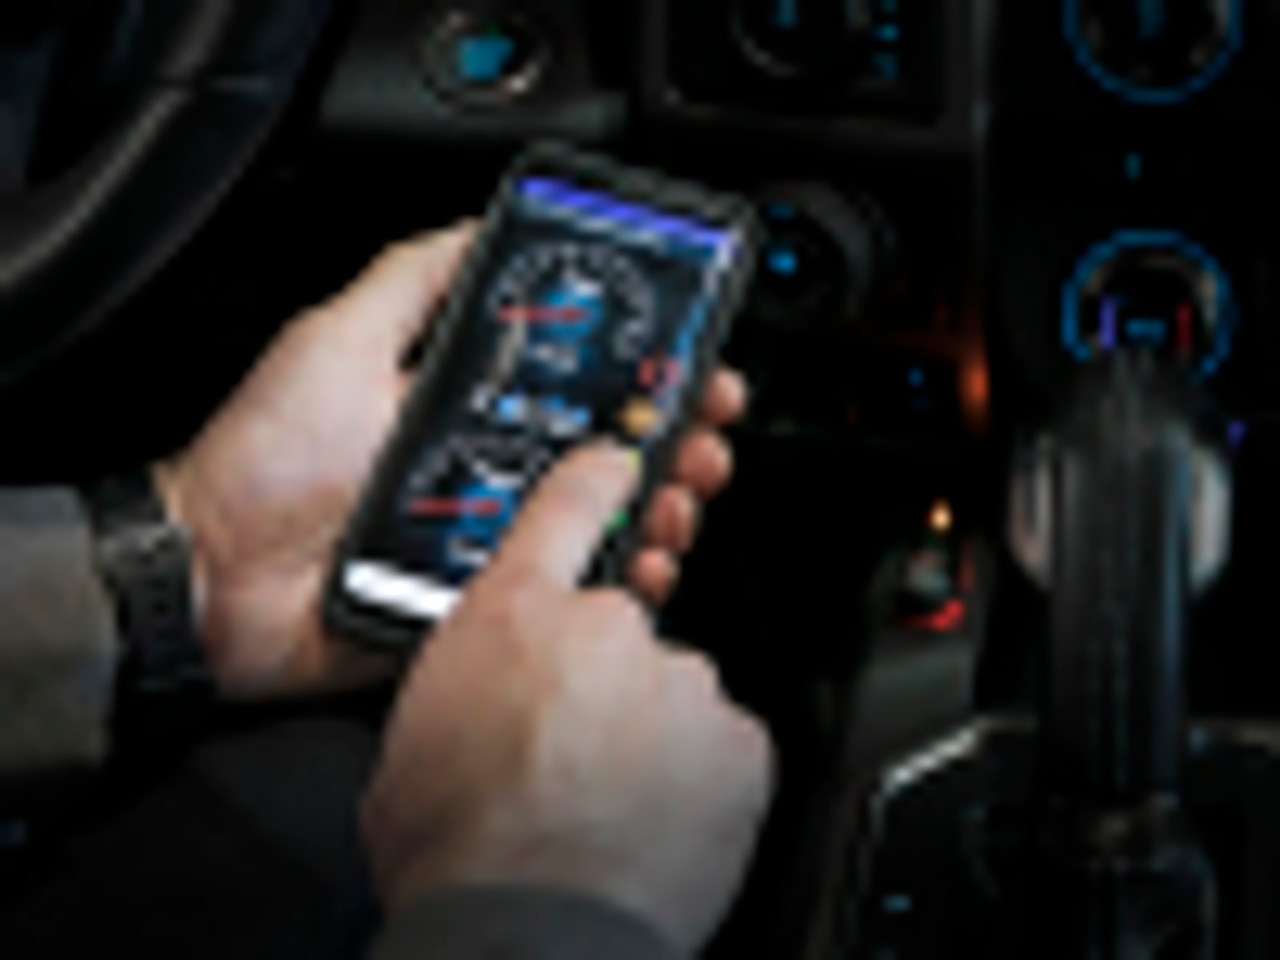 SCORCHER BLUE Bluetooth Capable Power Module
Adjustability: Smart Phone App